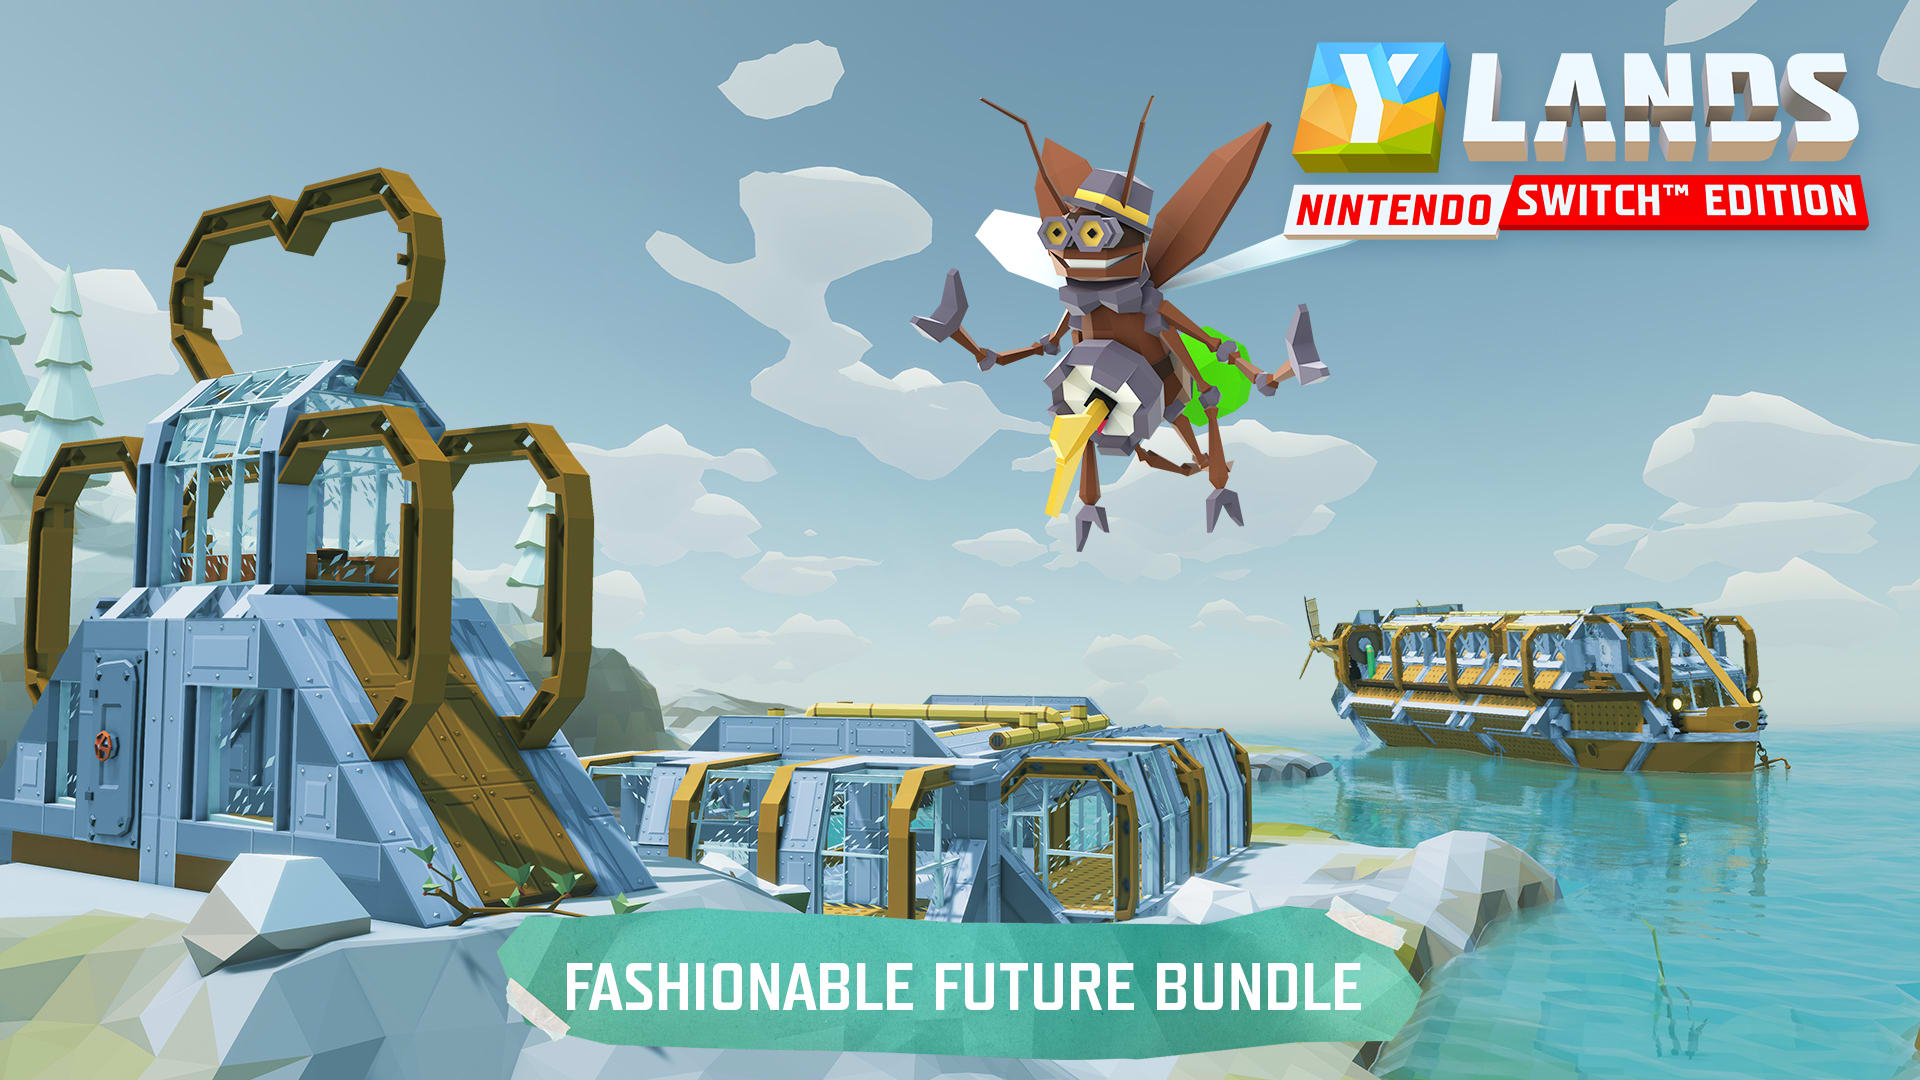 Ylands Nintendo Switch™ Edition - Fashionable Future Bundle